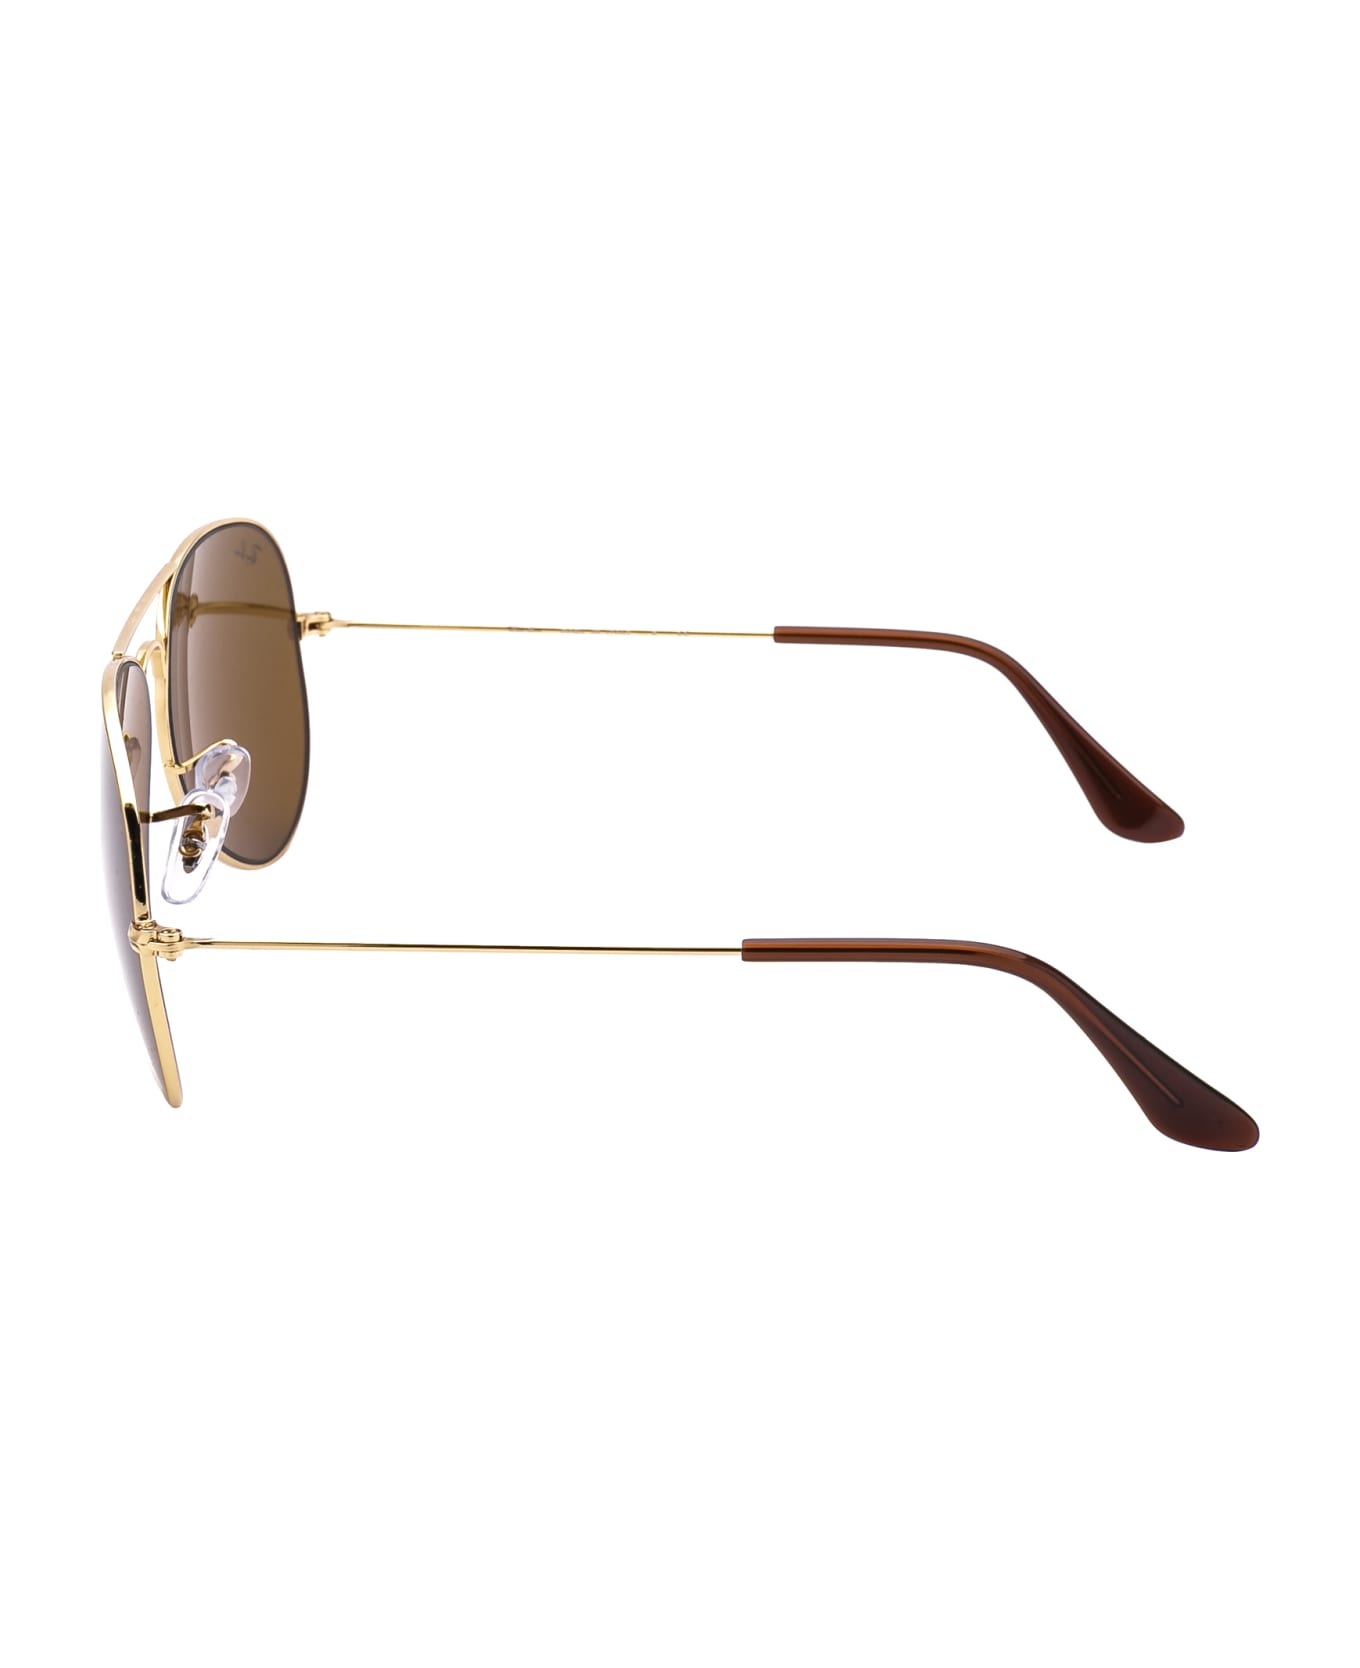 Ray-Ban Aviator Sunglasses - 001/33 GOLD サングラス